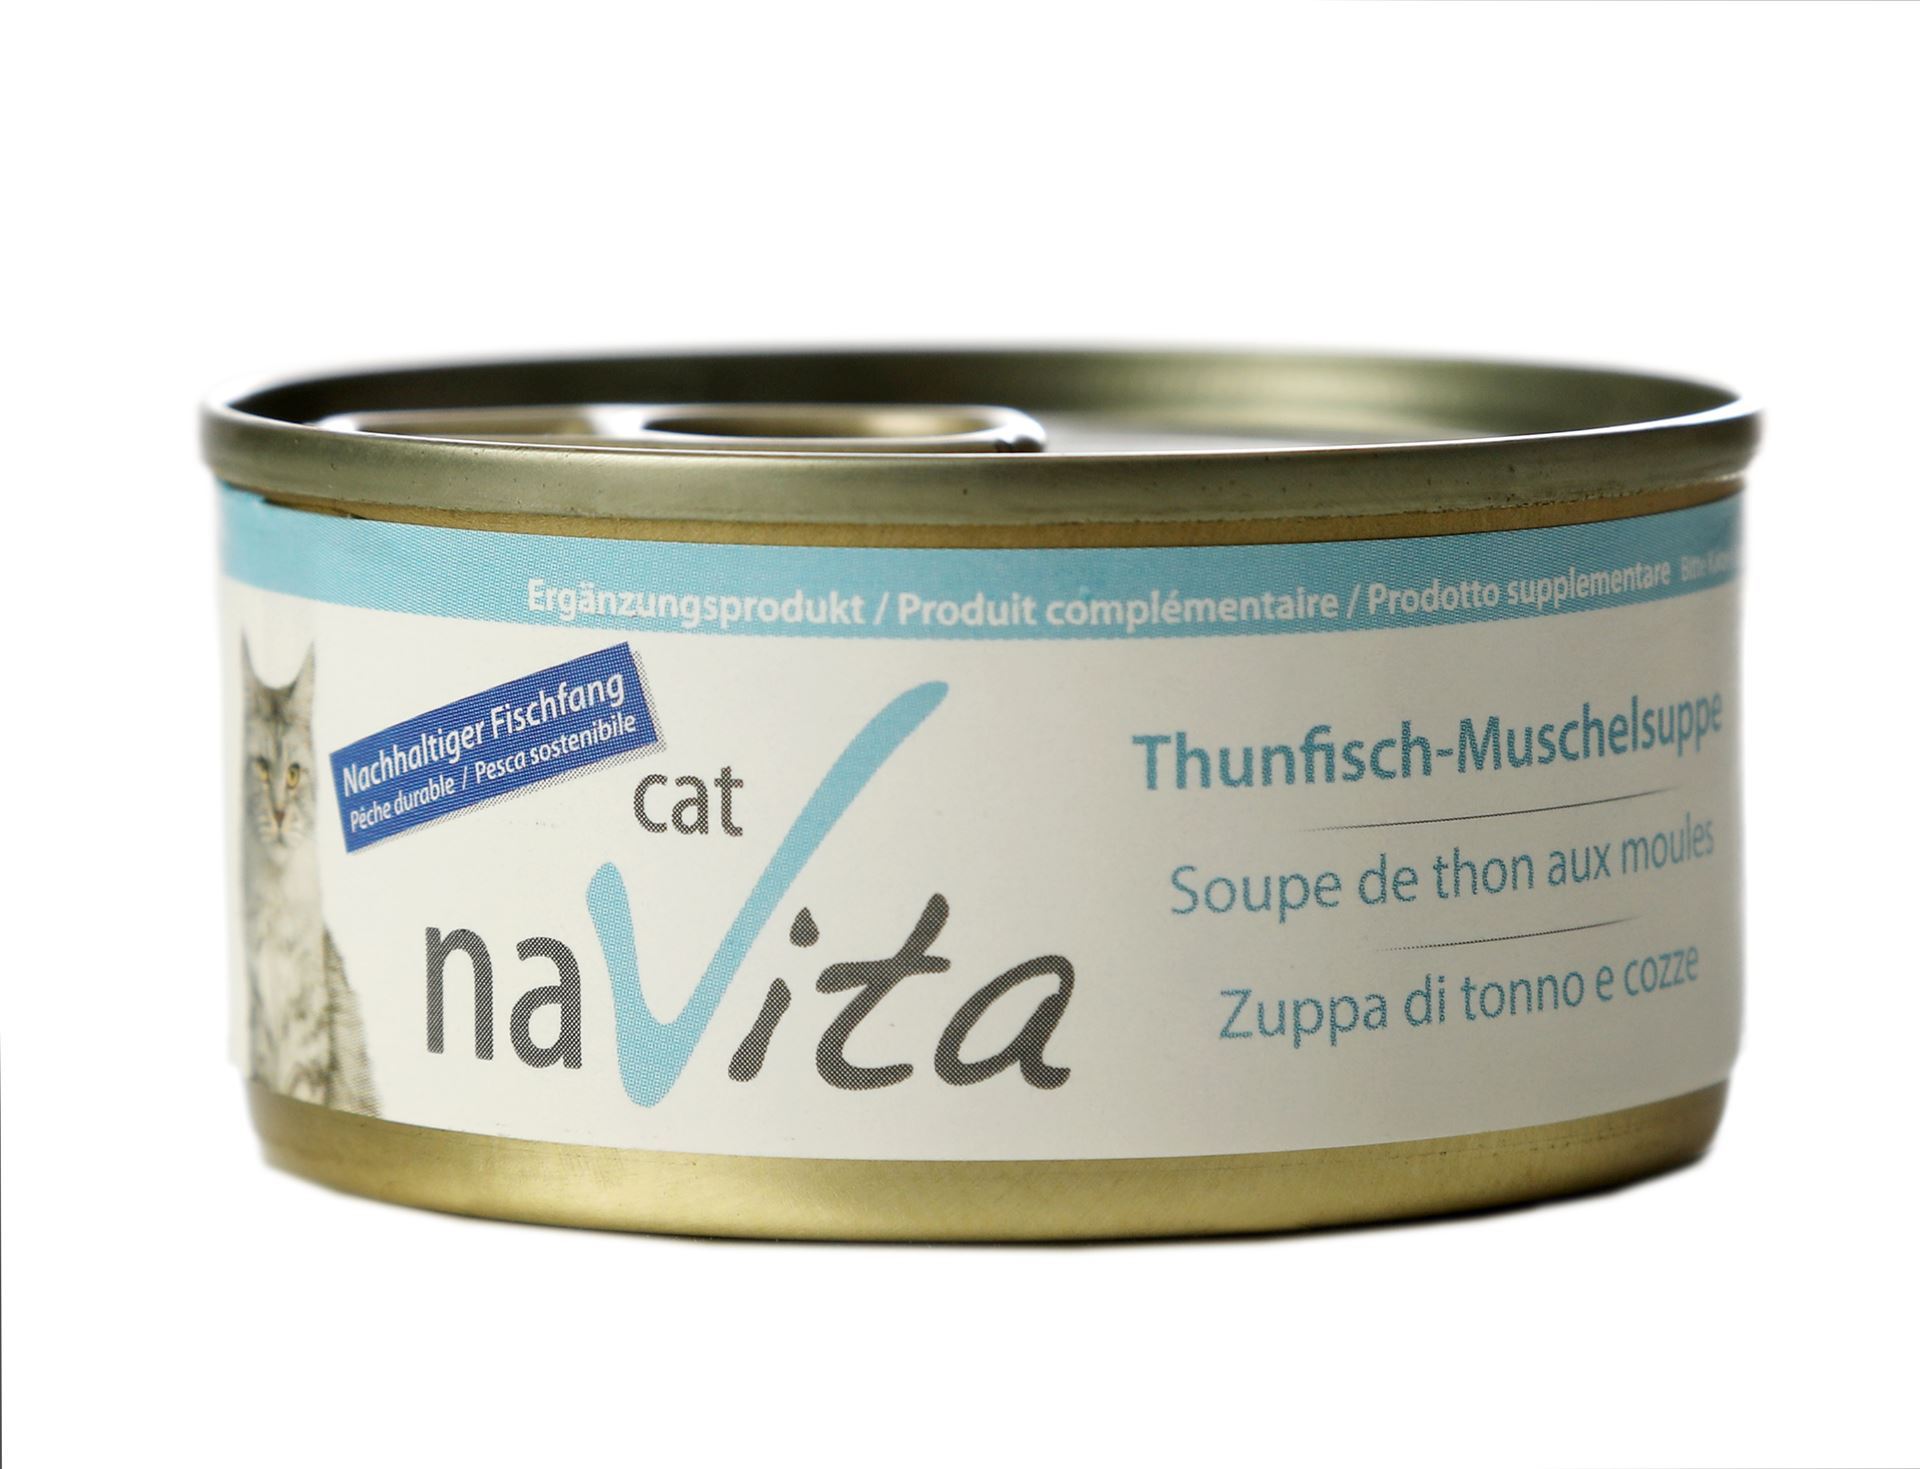 Aktionspreis: Thunfisch-Muschelsuppe